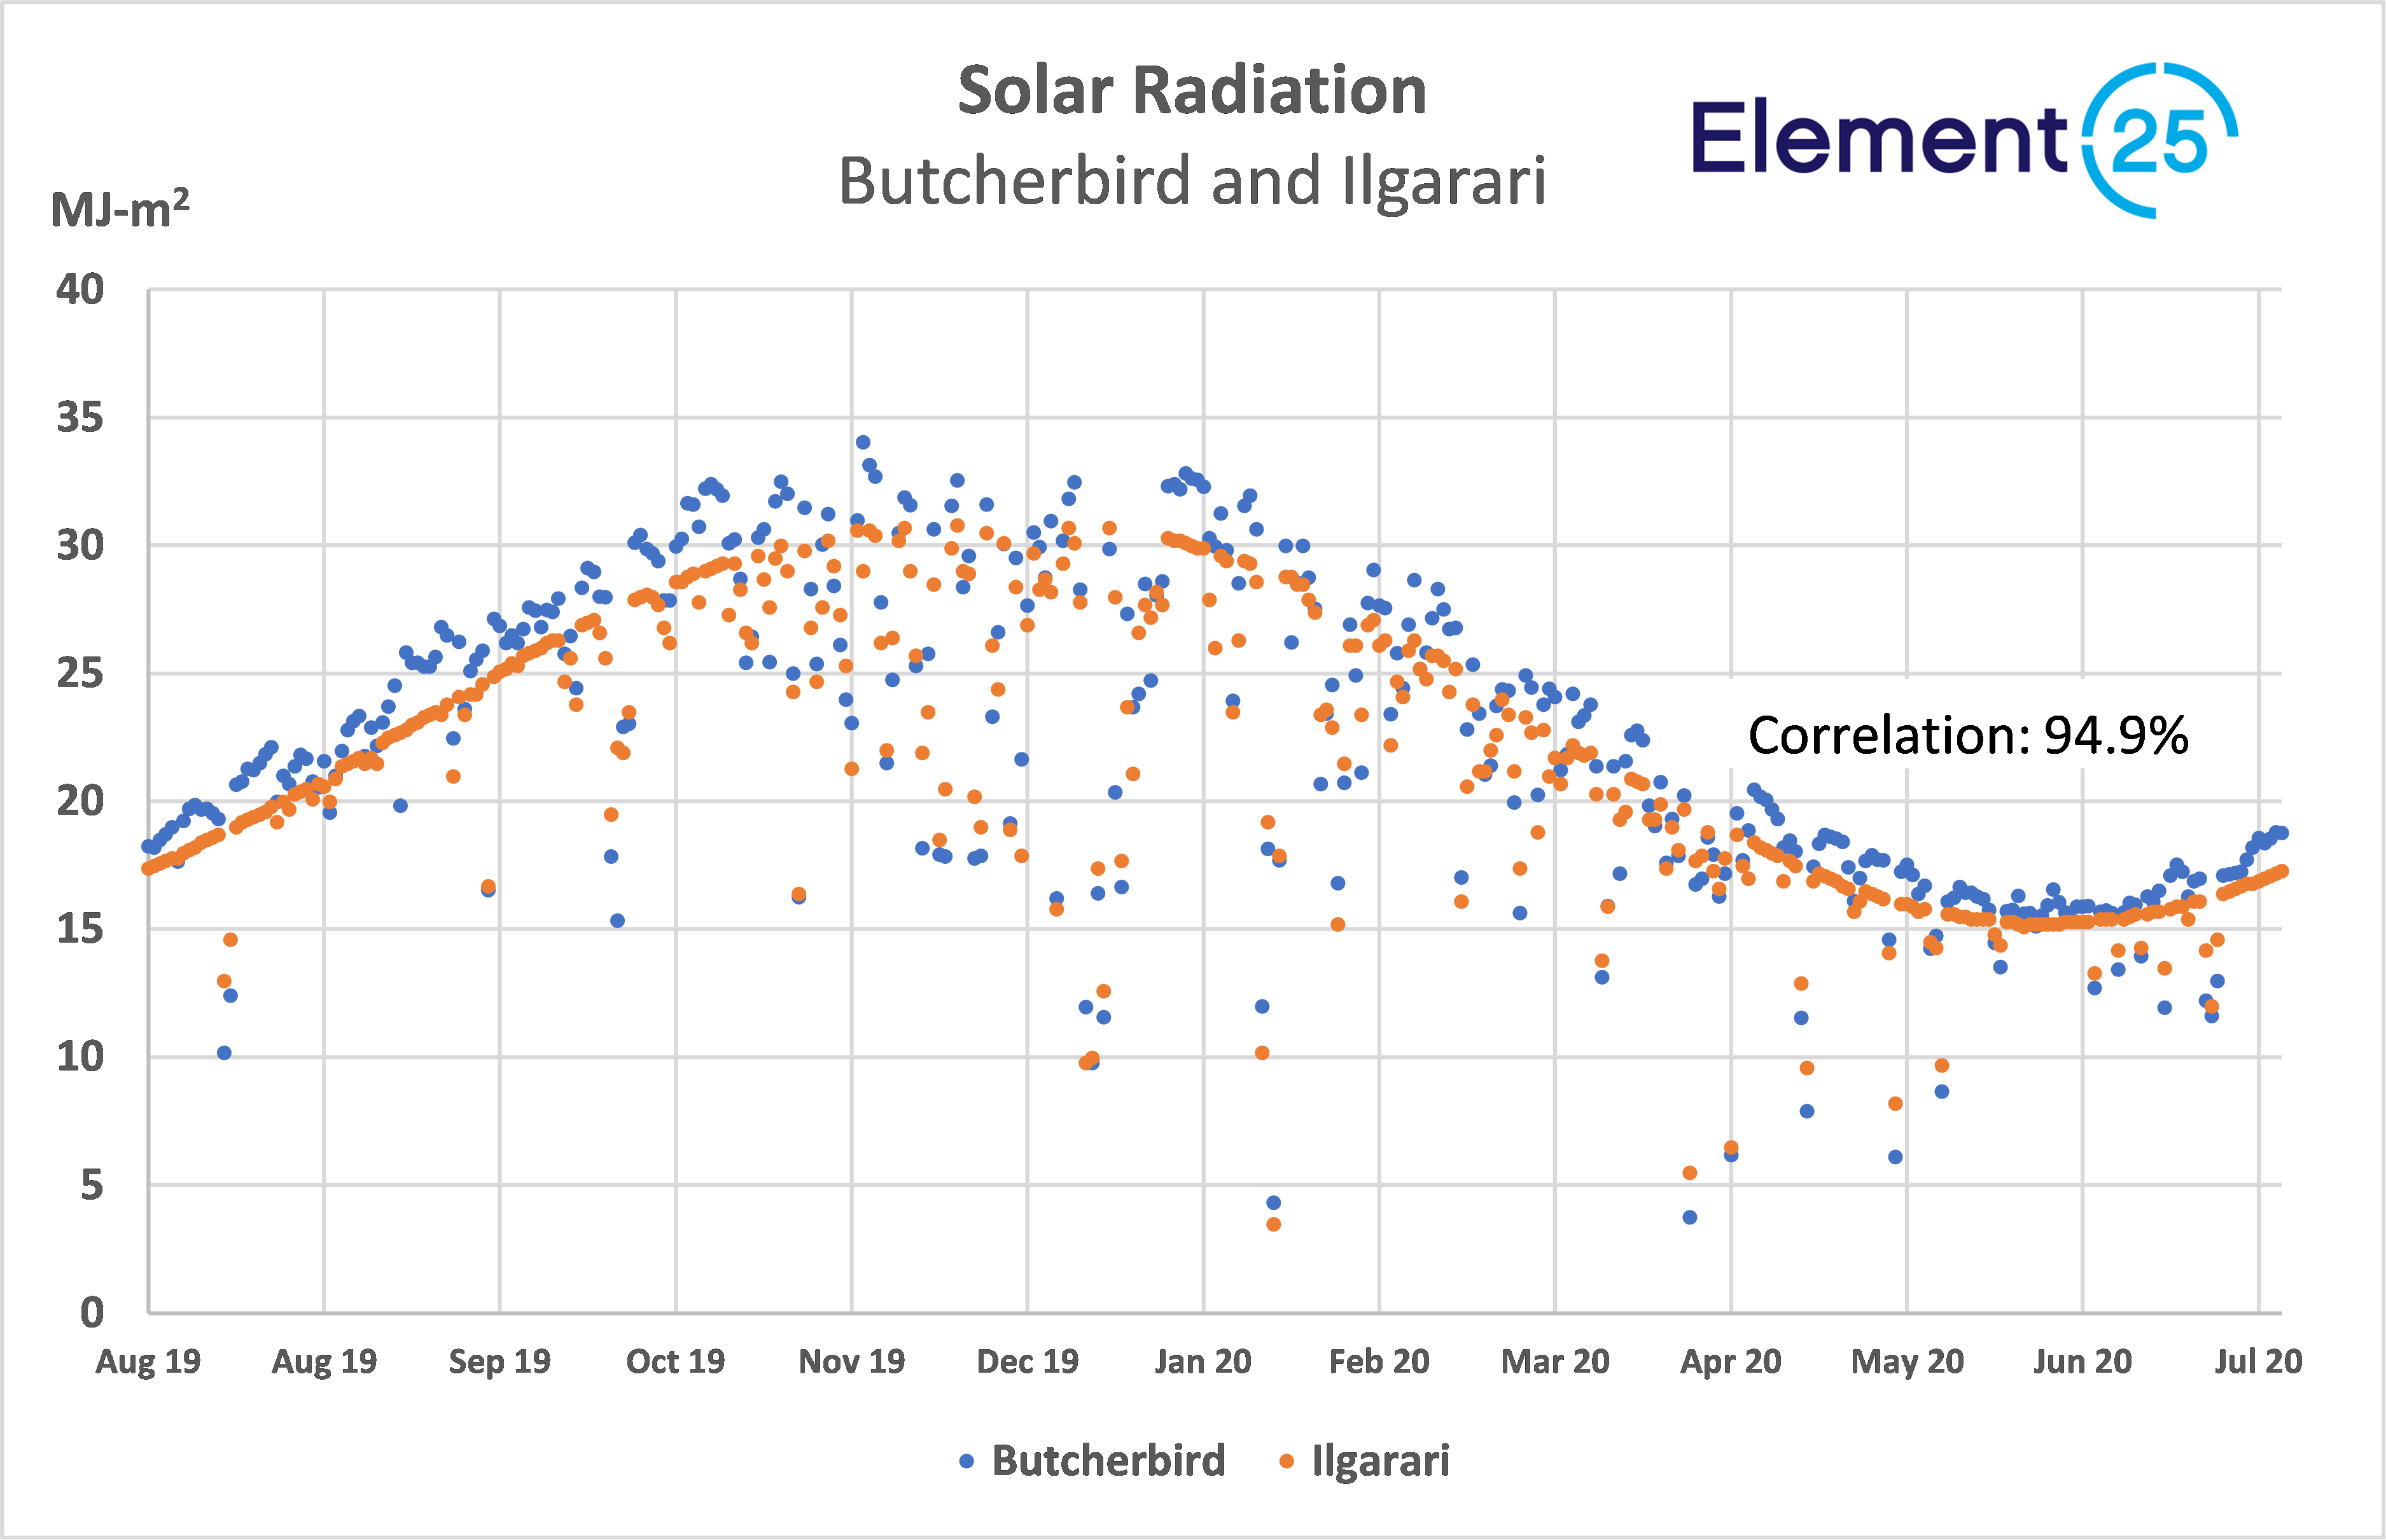 Figure 5: Butcherbird and Ilgarari Solar Radiation Data, Daily Averages